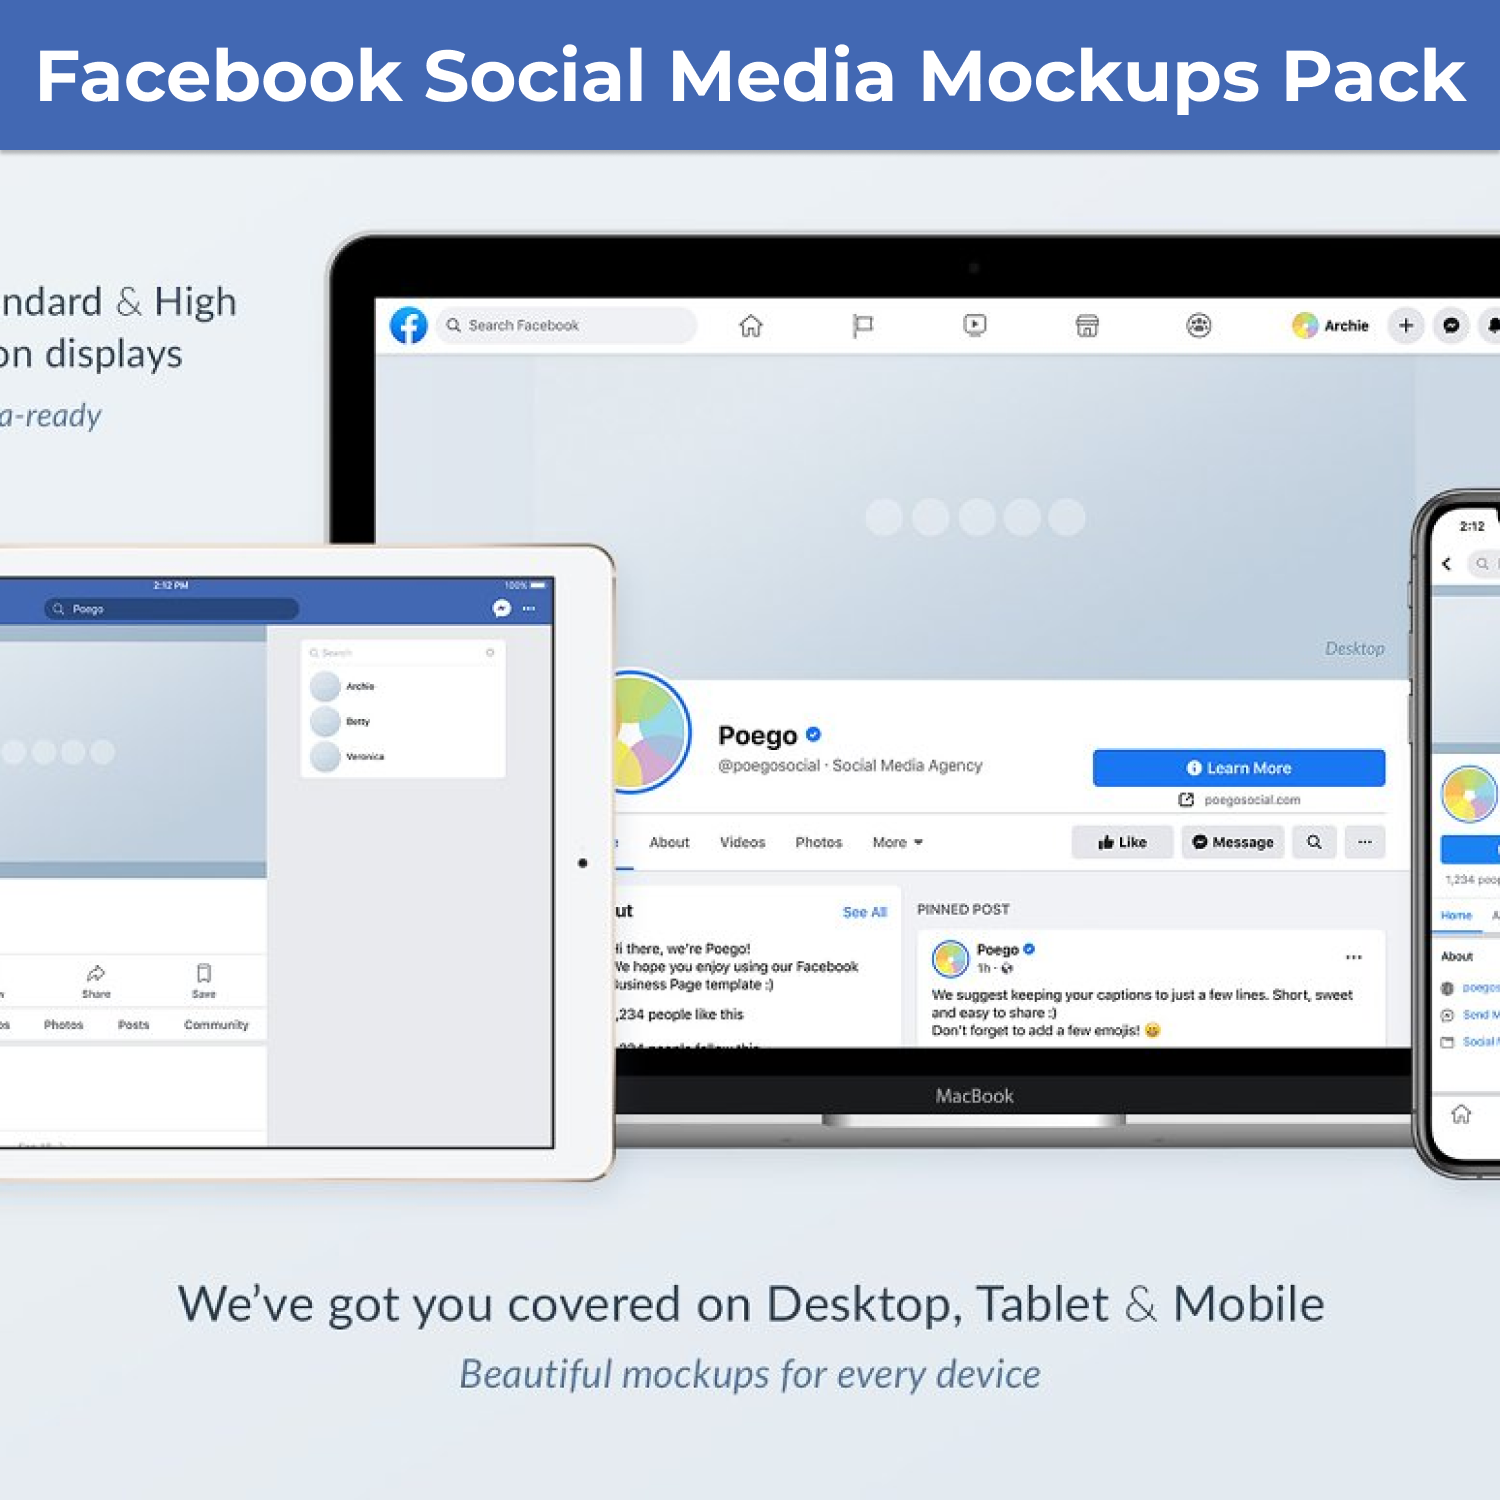 Facebook Social Media Mockups Pack preview image.